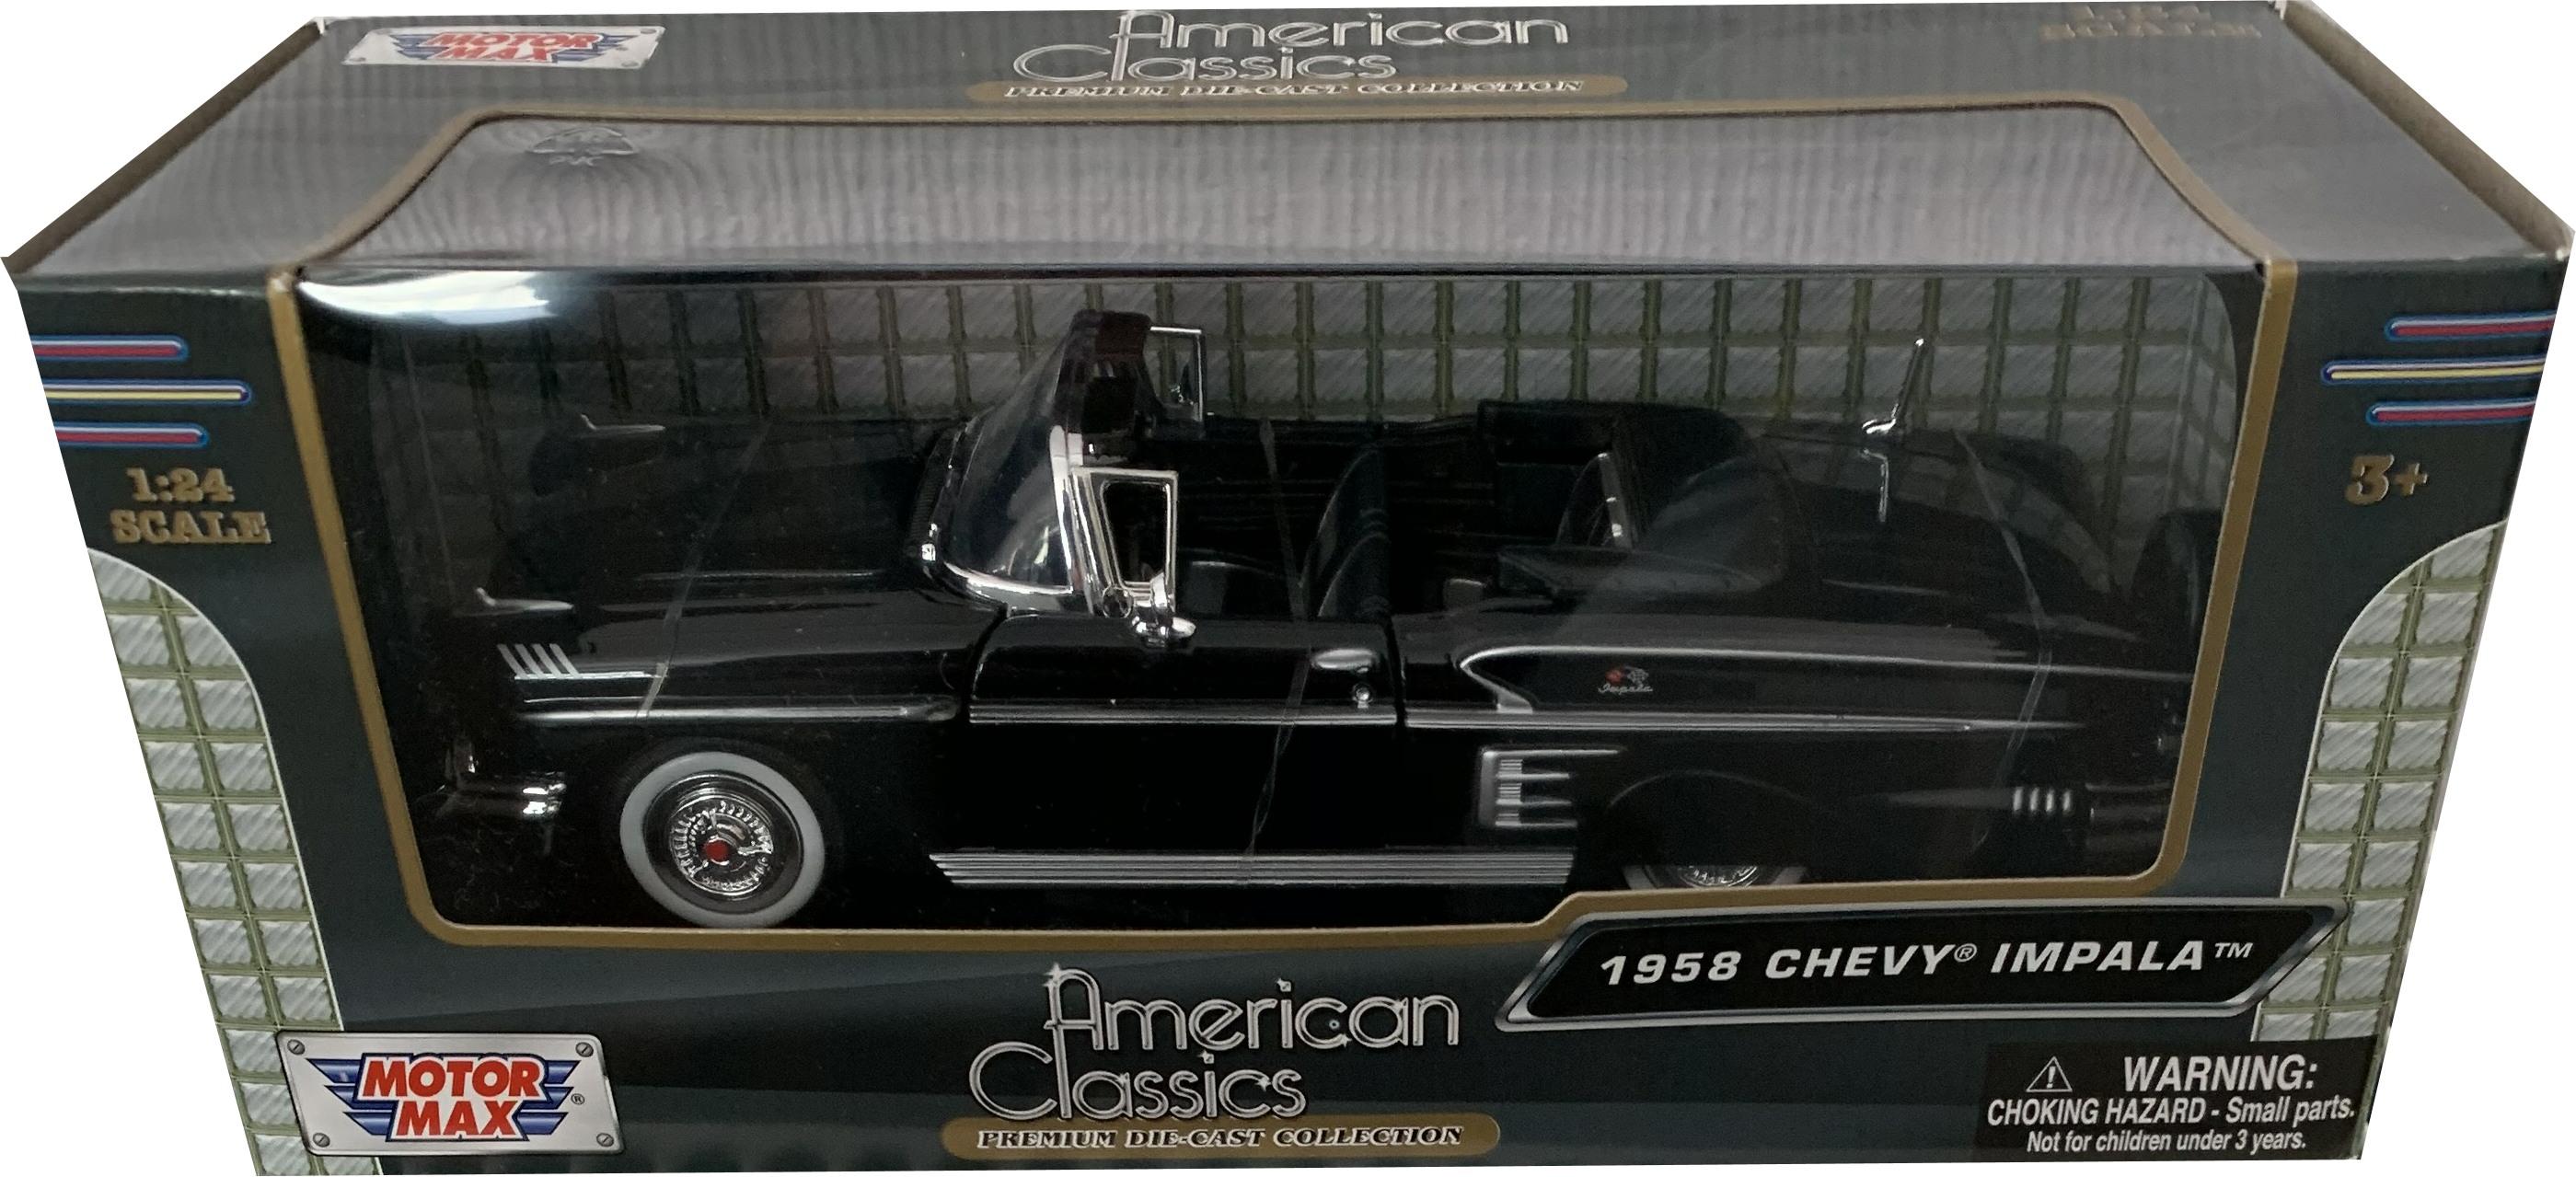 Chevrolet Impala, opentop 1958 in black 1:24 scale model from motormax